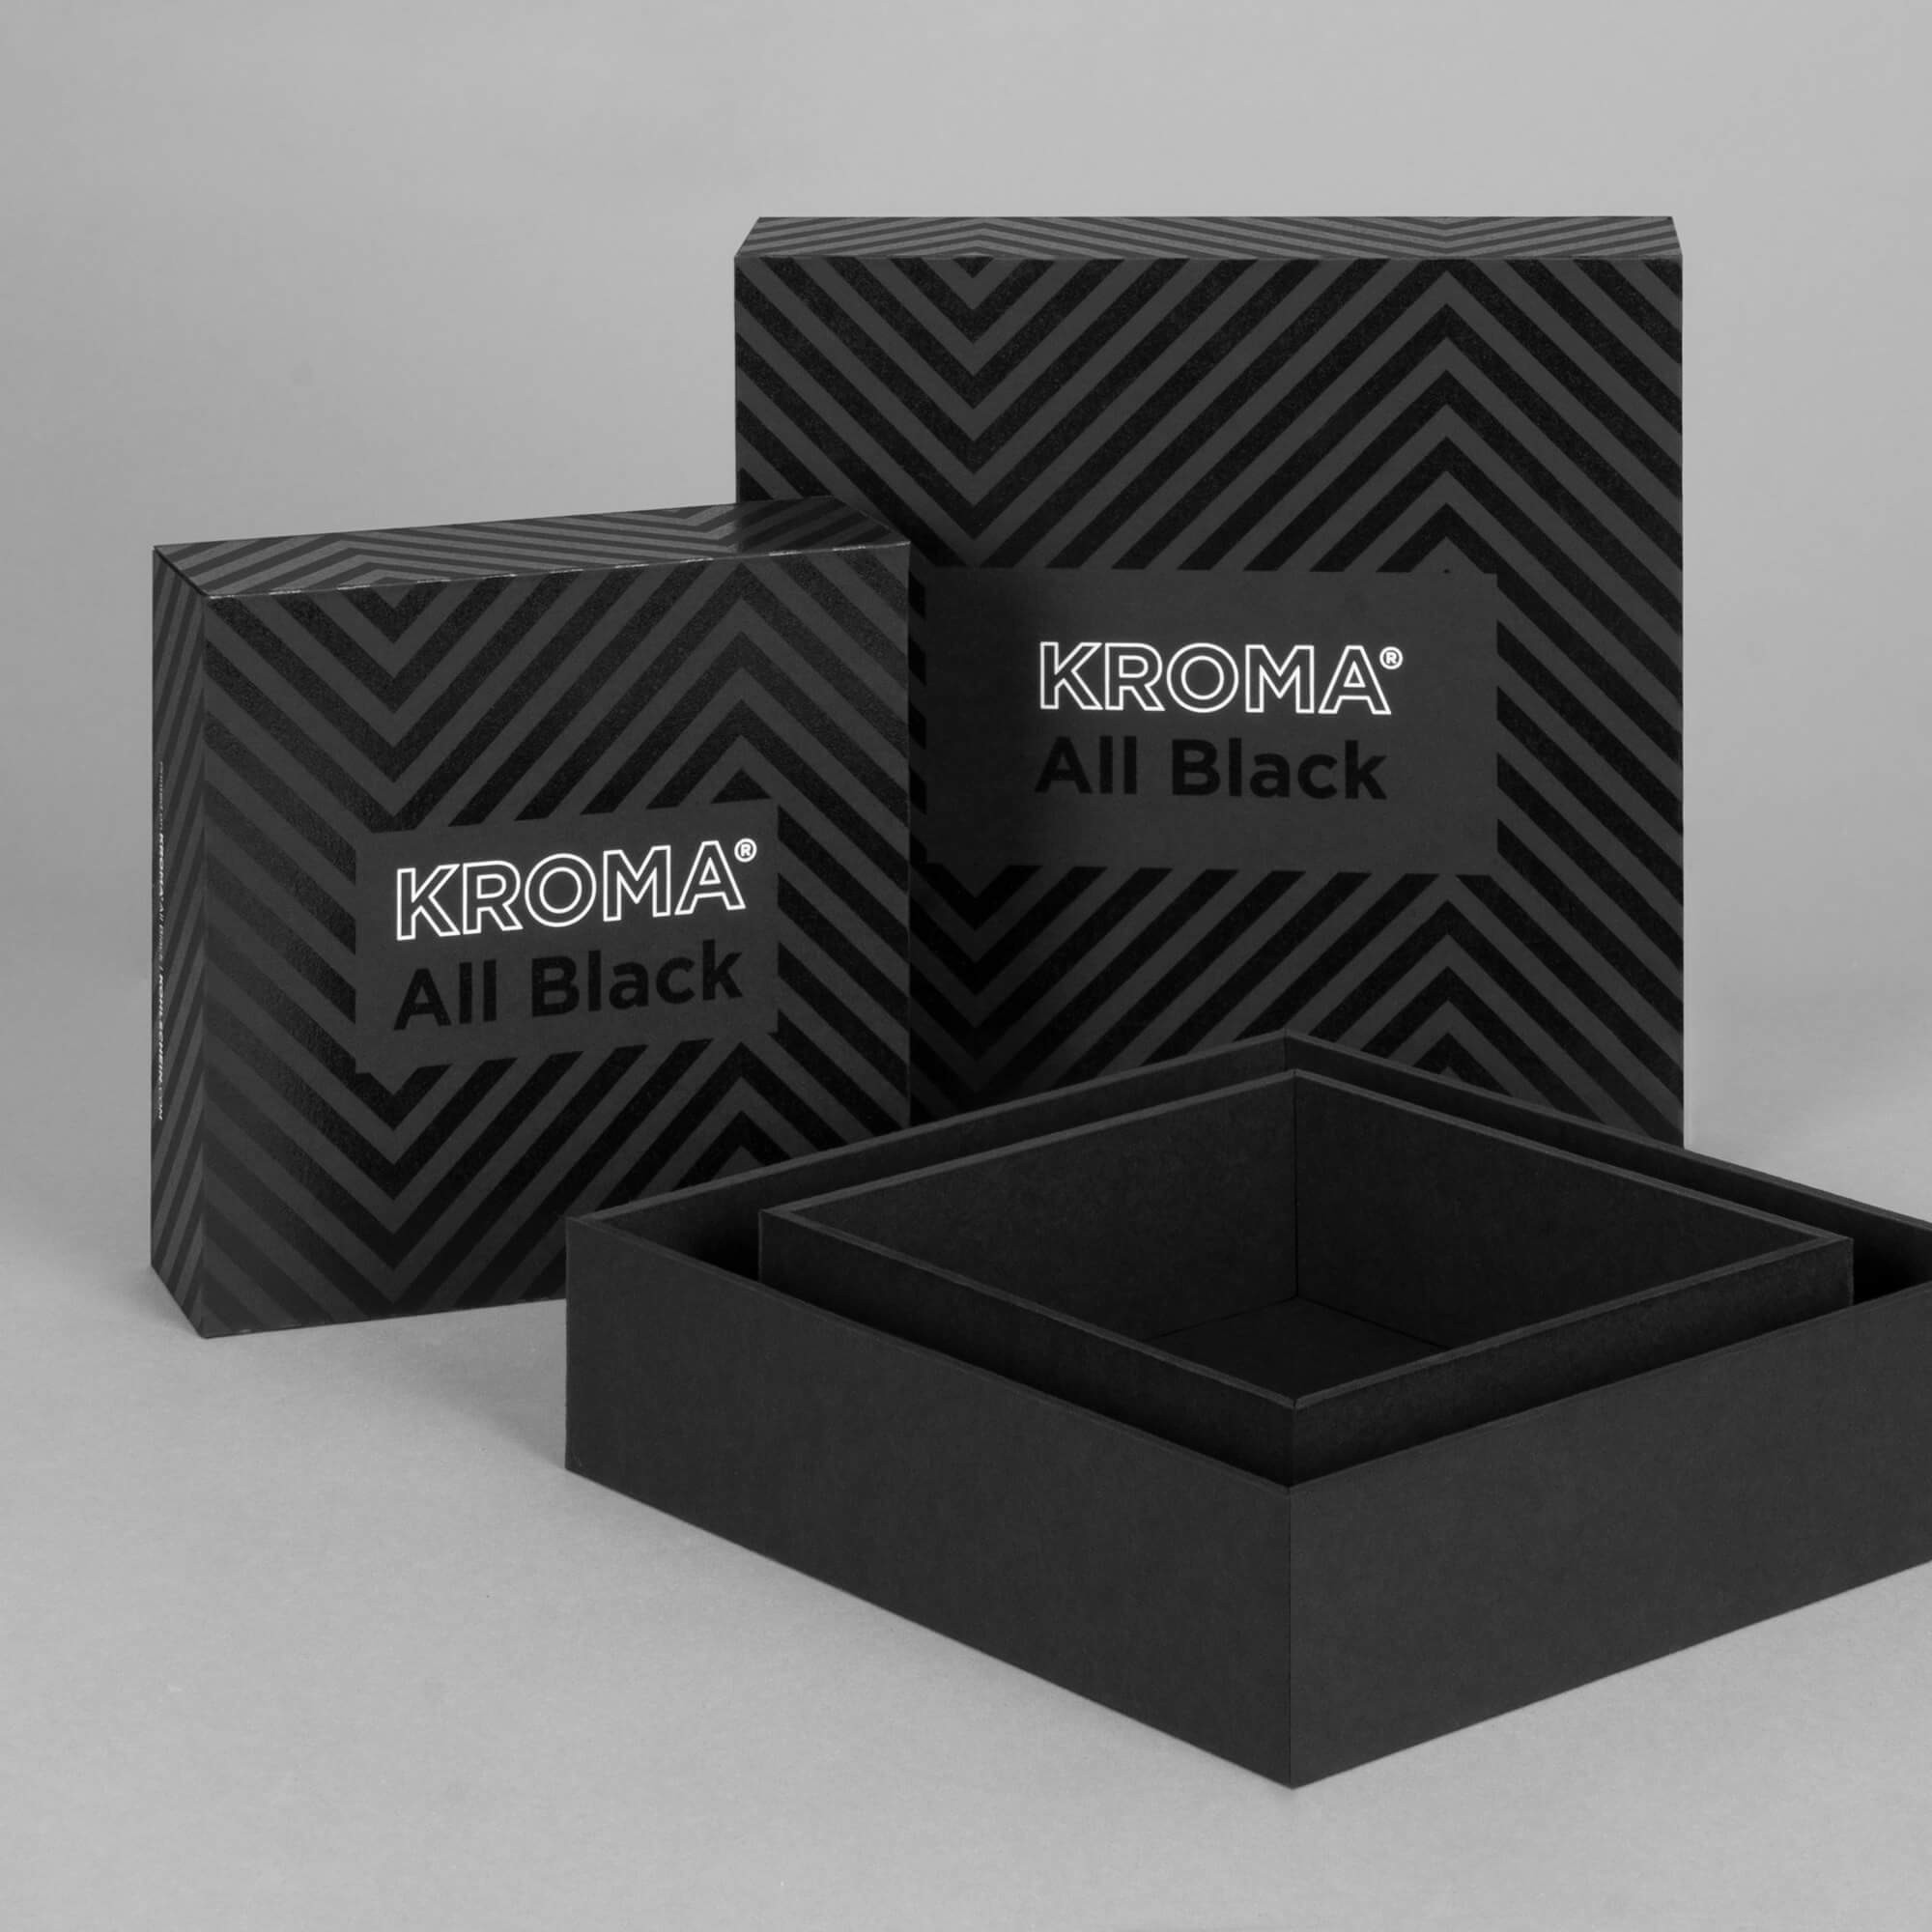 KROMA All Black display carton application example boxes